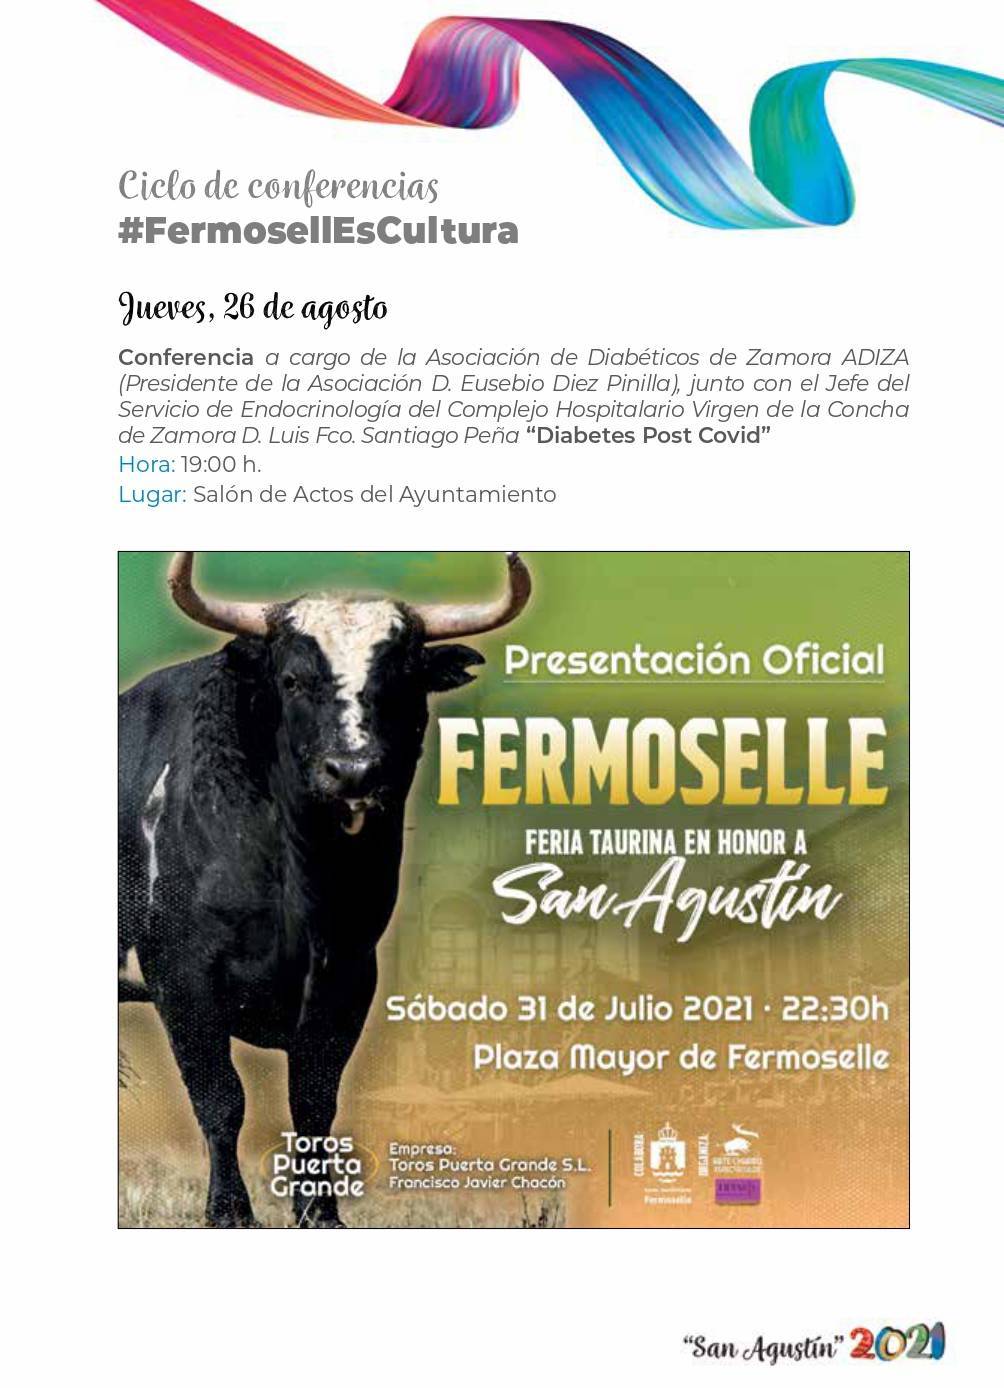 Programa de ferias y fiestas de San Agustín (2021) - Fermoselle (Zamora) 20